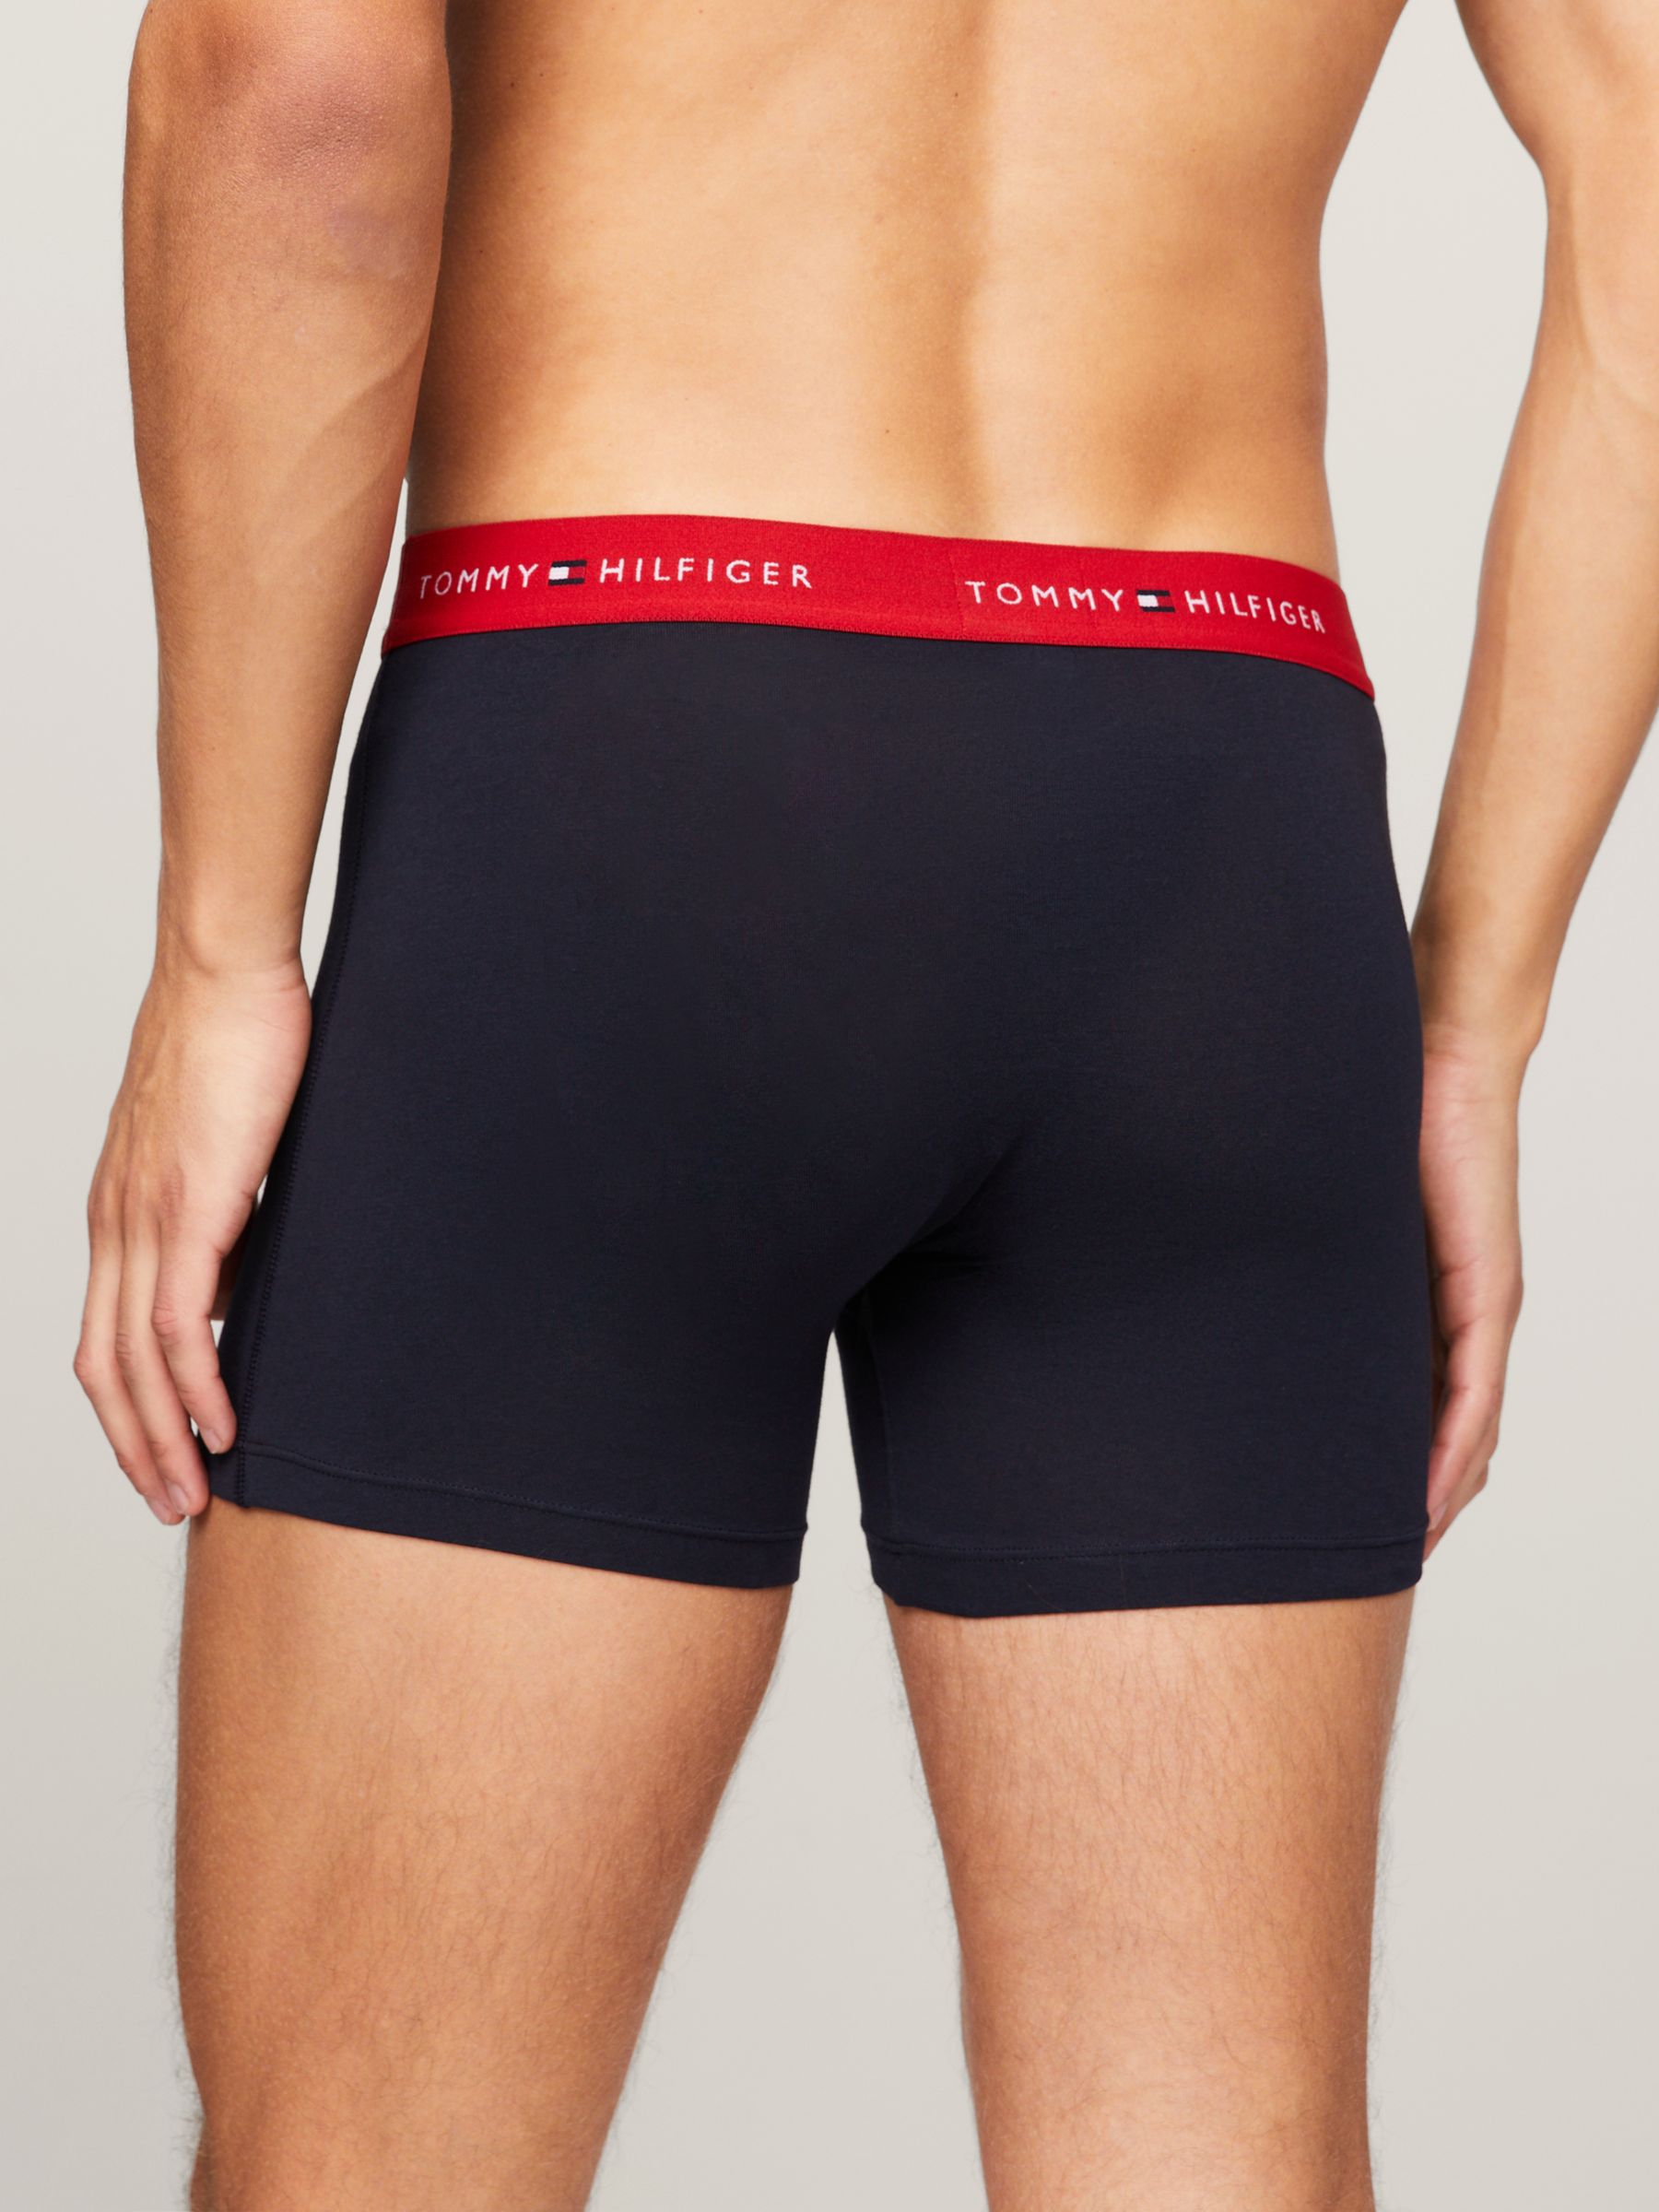 Tommy John Underwear for Men, Online Sale up to 40% off